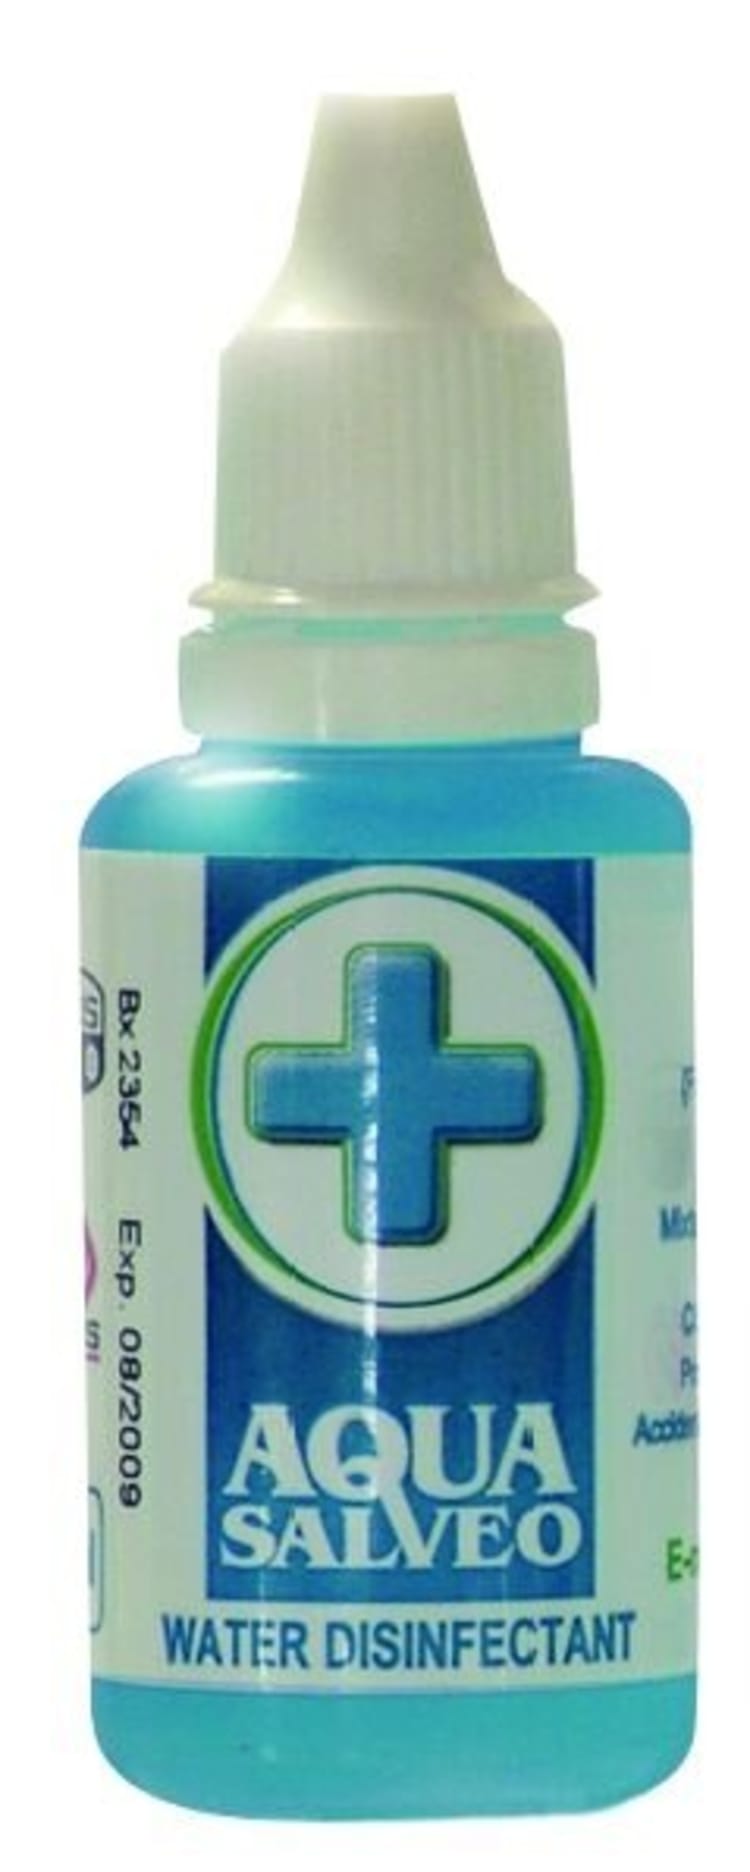 Aqua Salveo Water Disinfectant 30ml Retail Pack - default